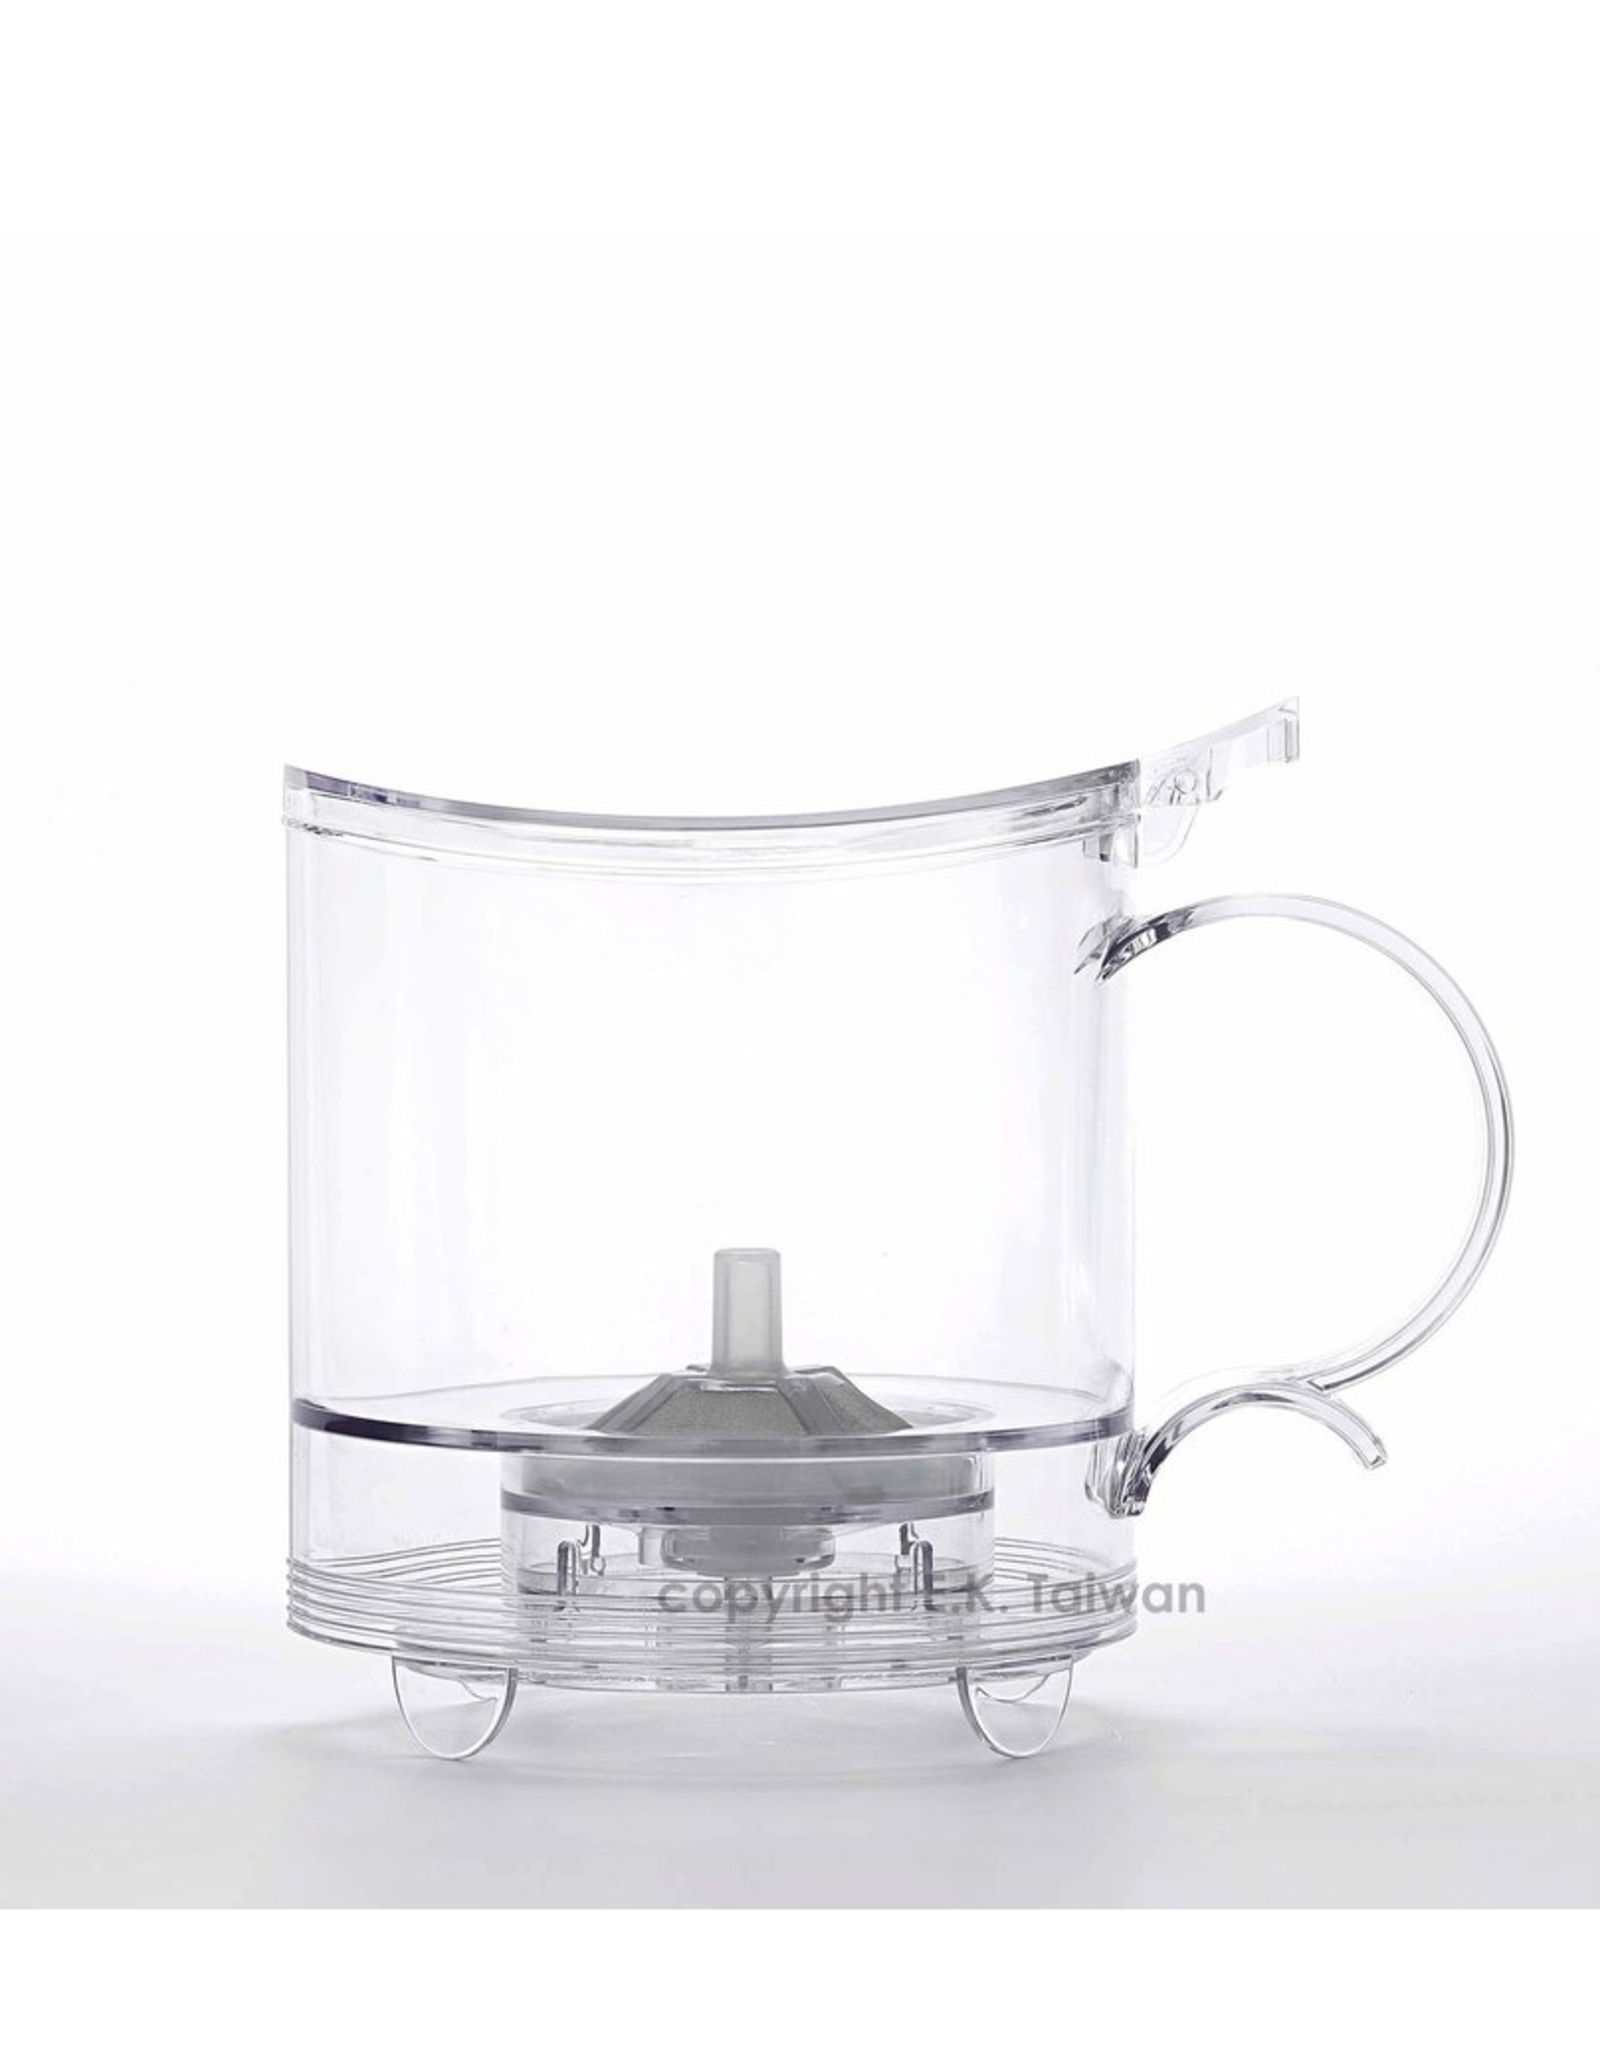 Arelo thee & accessoires Handybrew Tea Maker "Theezetter" 500ml - Arelo